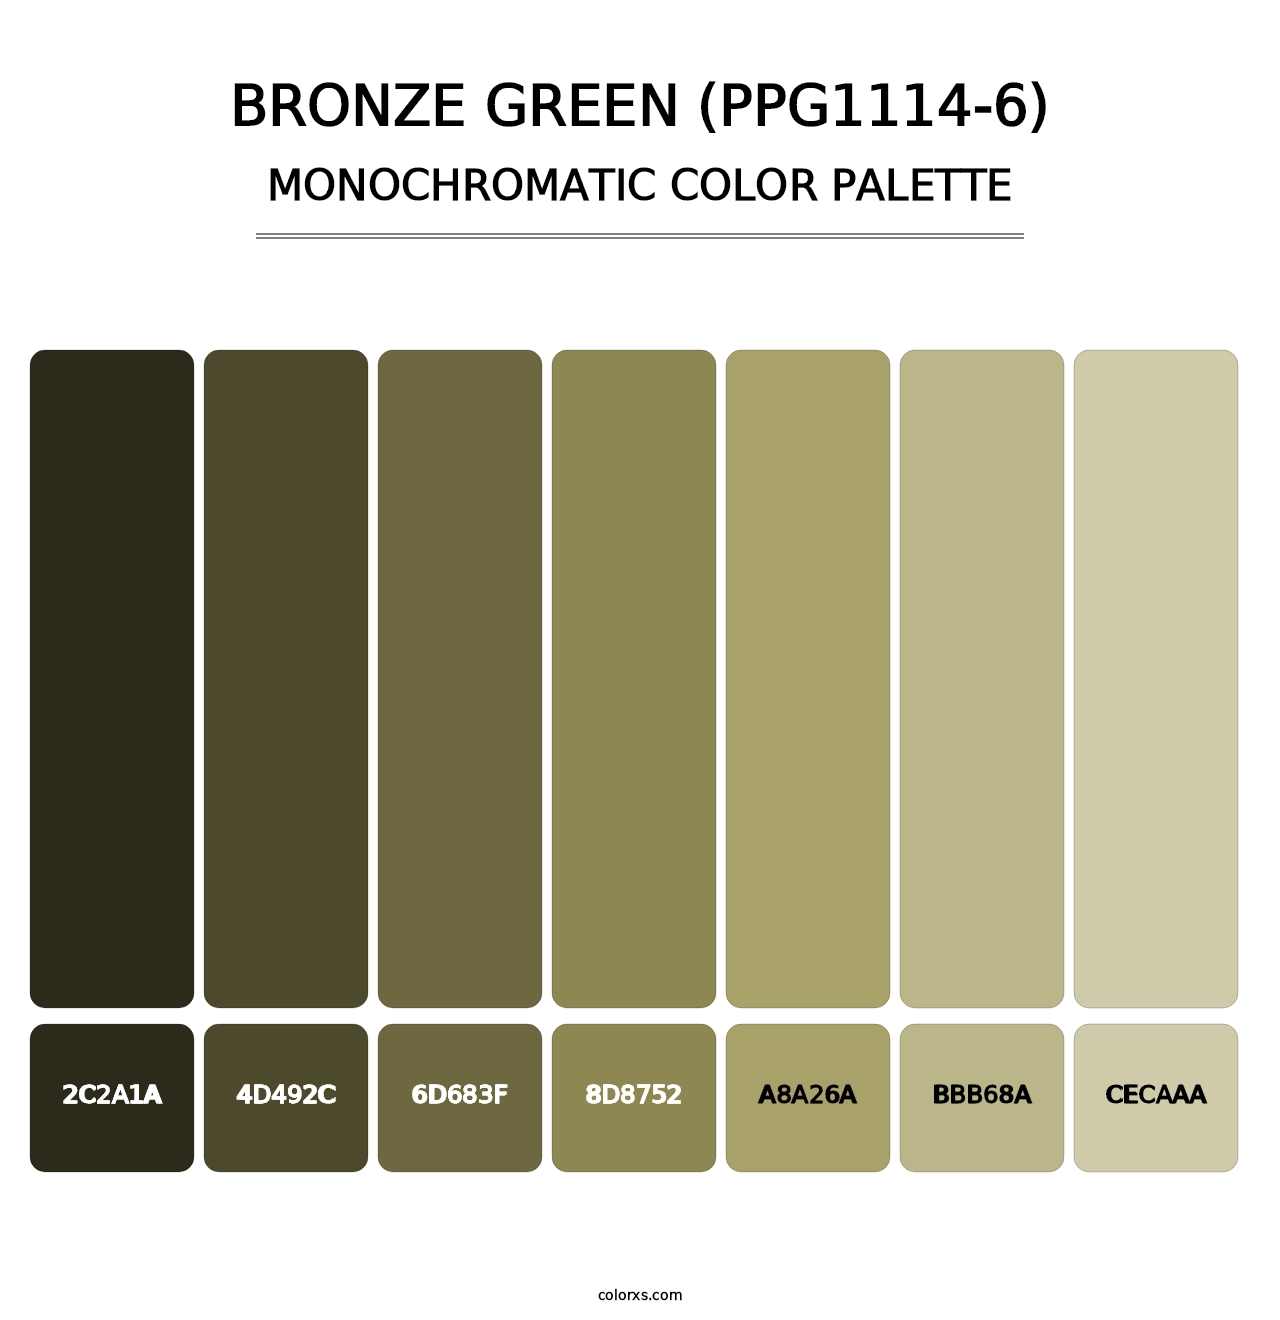 Bronze Green (PPG1114-6) - Monochromatic Color Palette